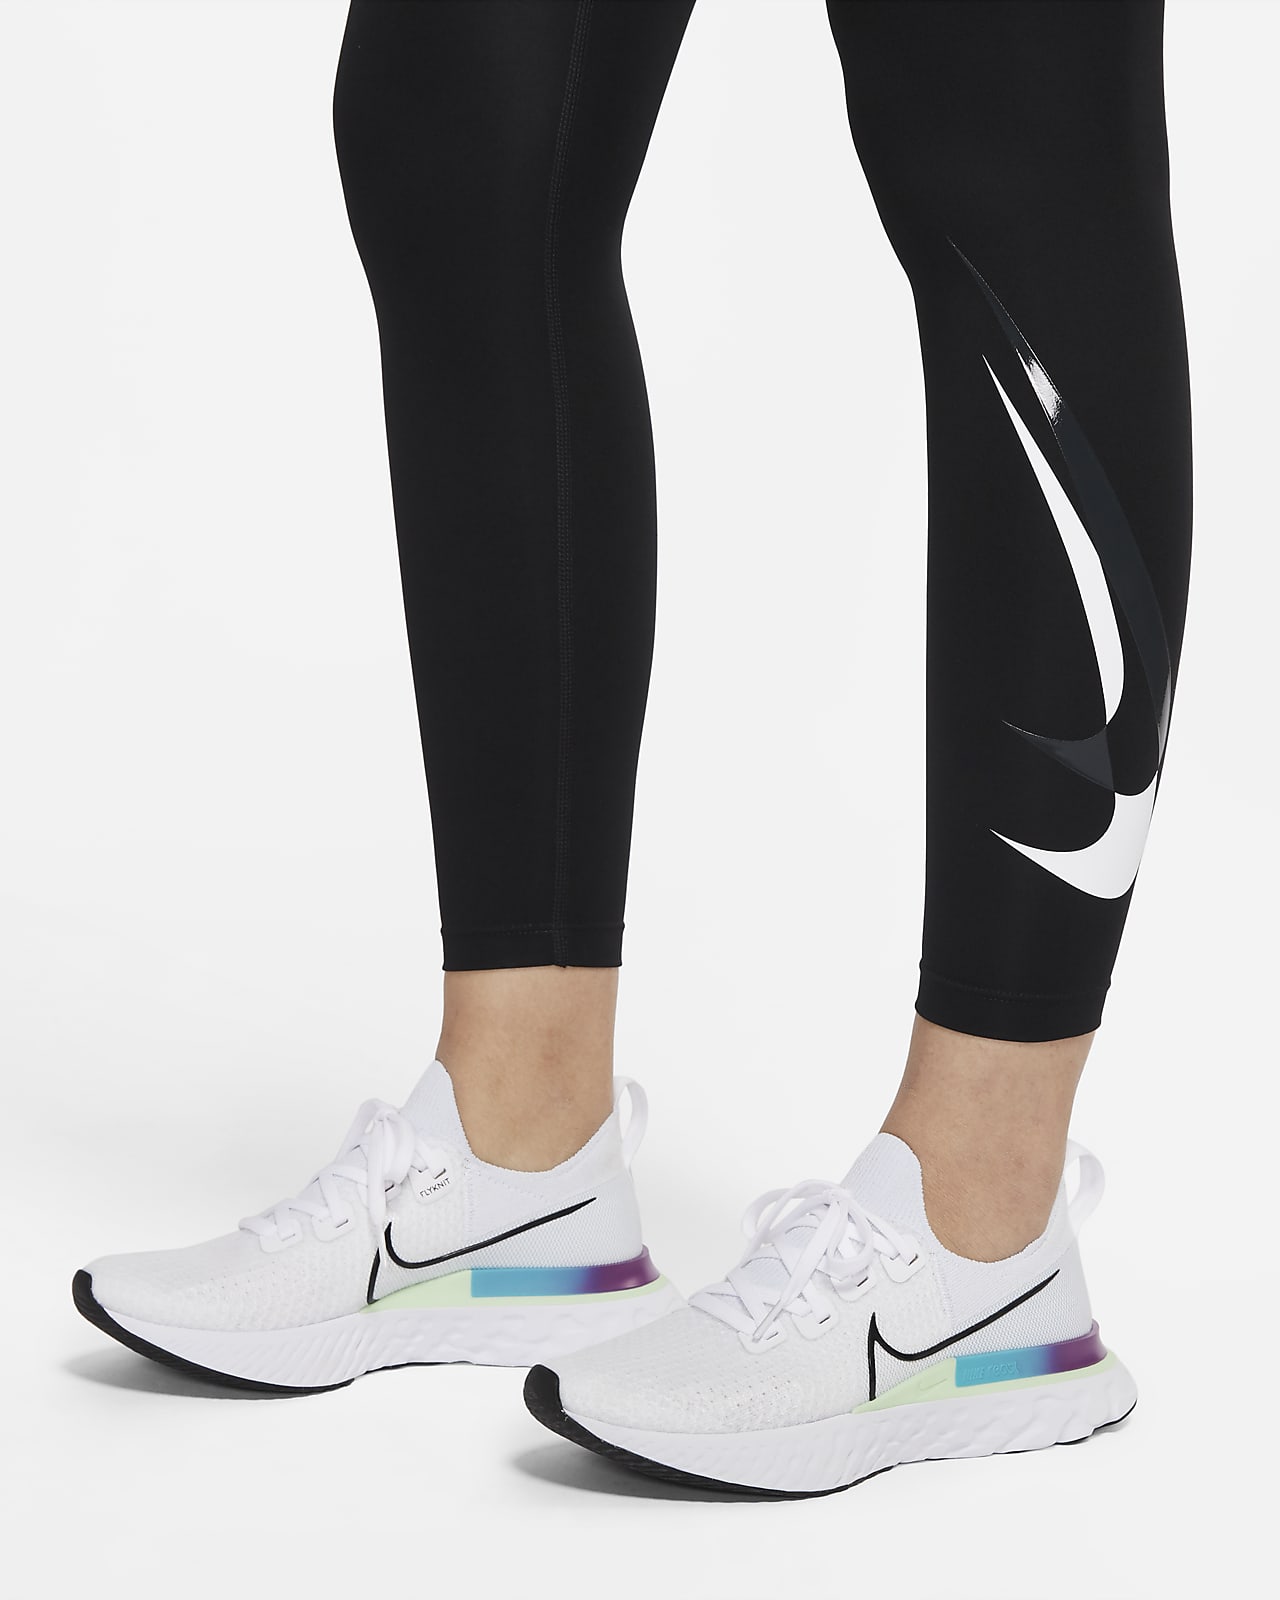 Nike Swoosh Run Women's 7/8-Length Mid-Rise Running Leggings. Nike ID